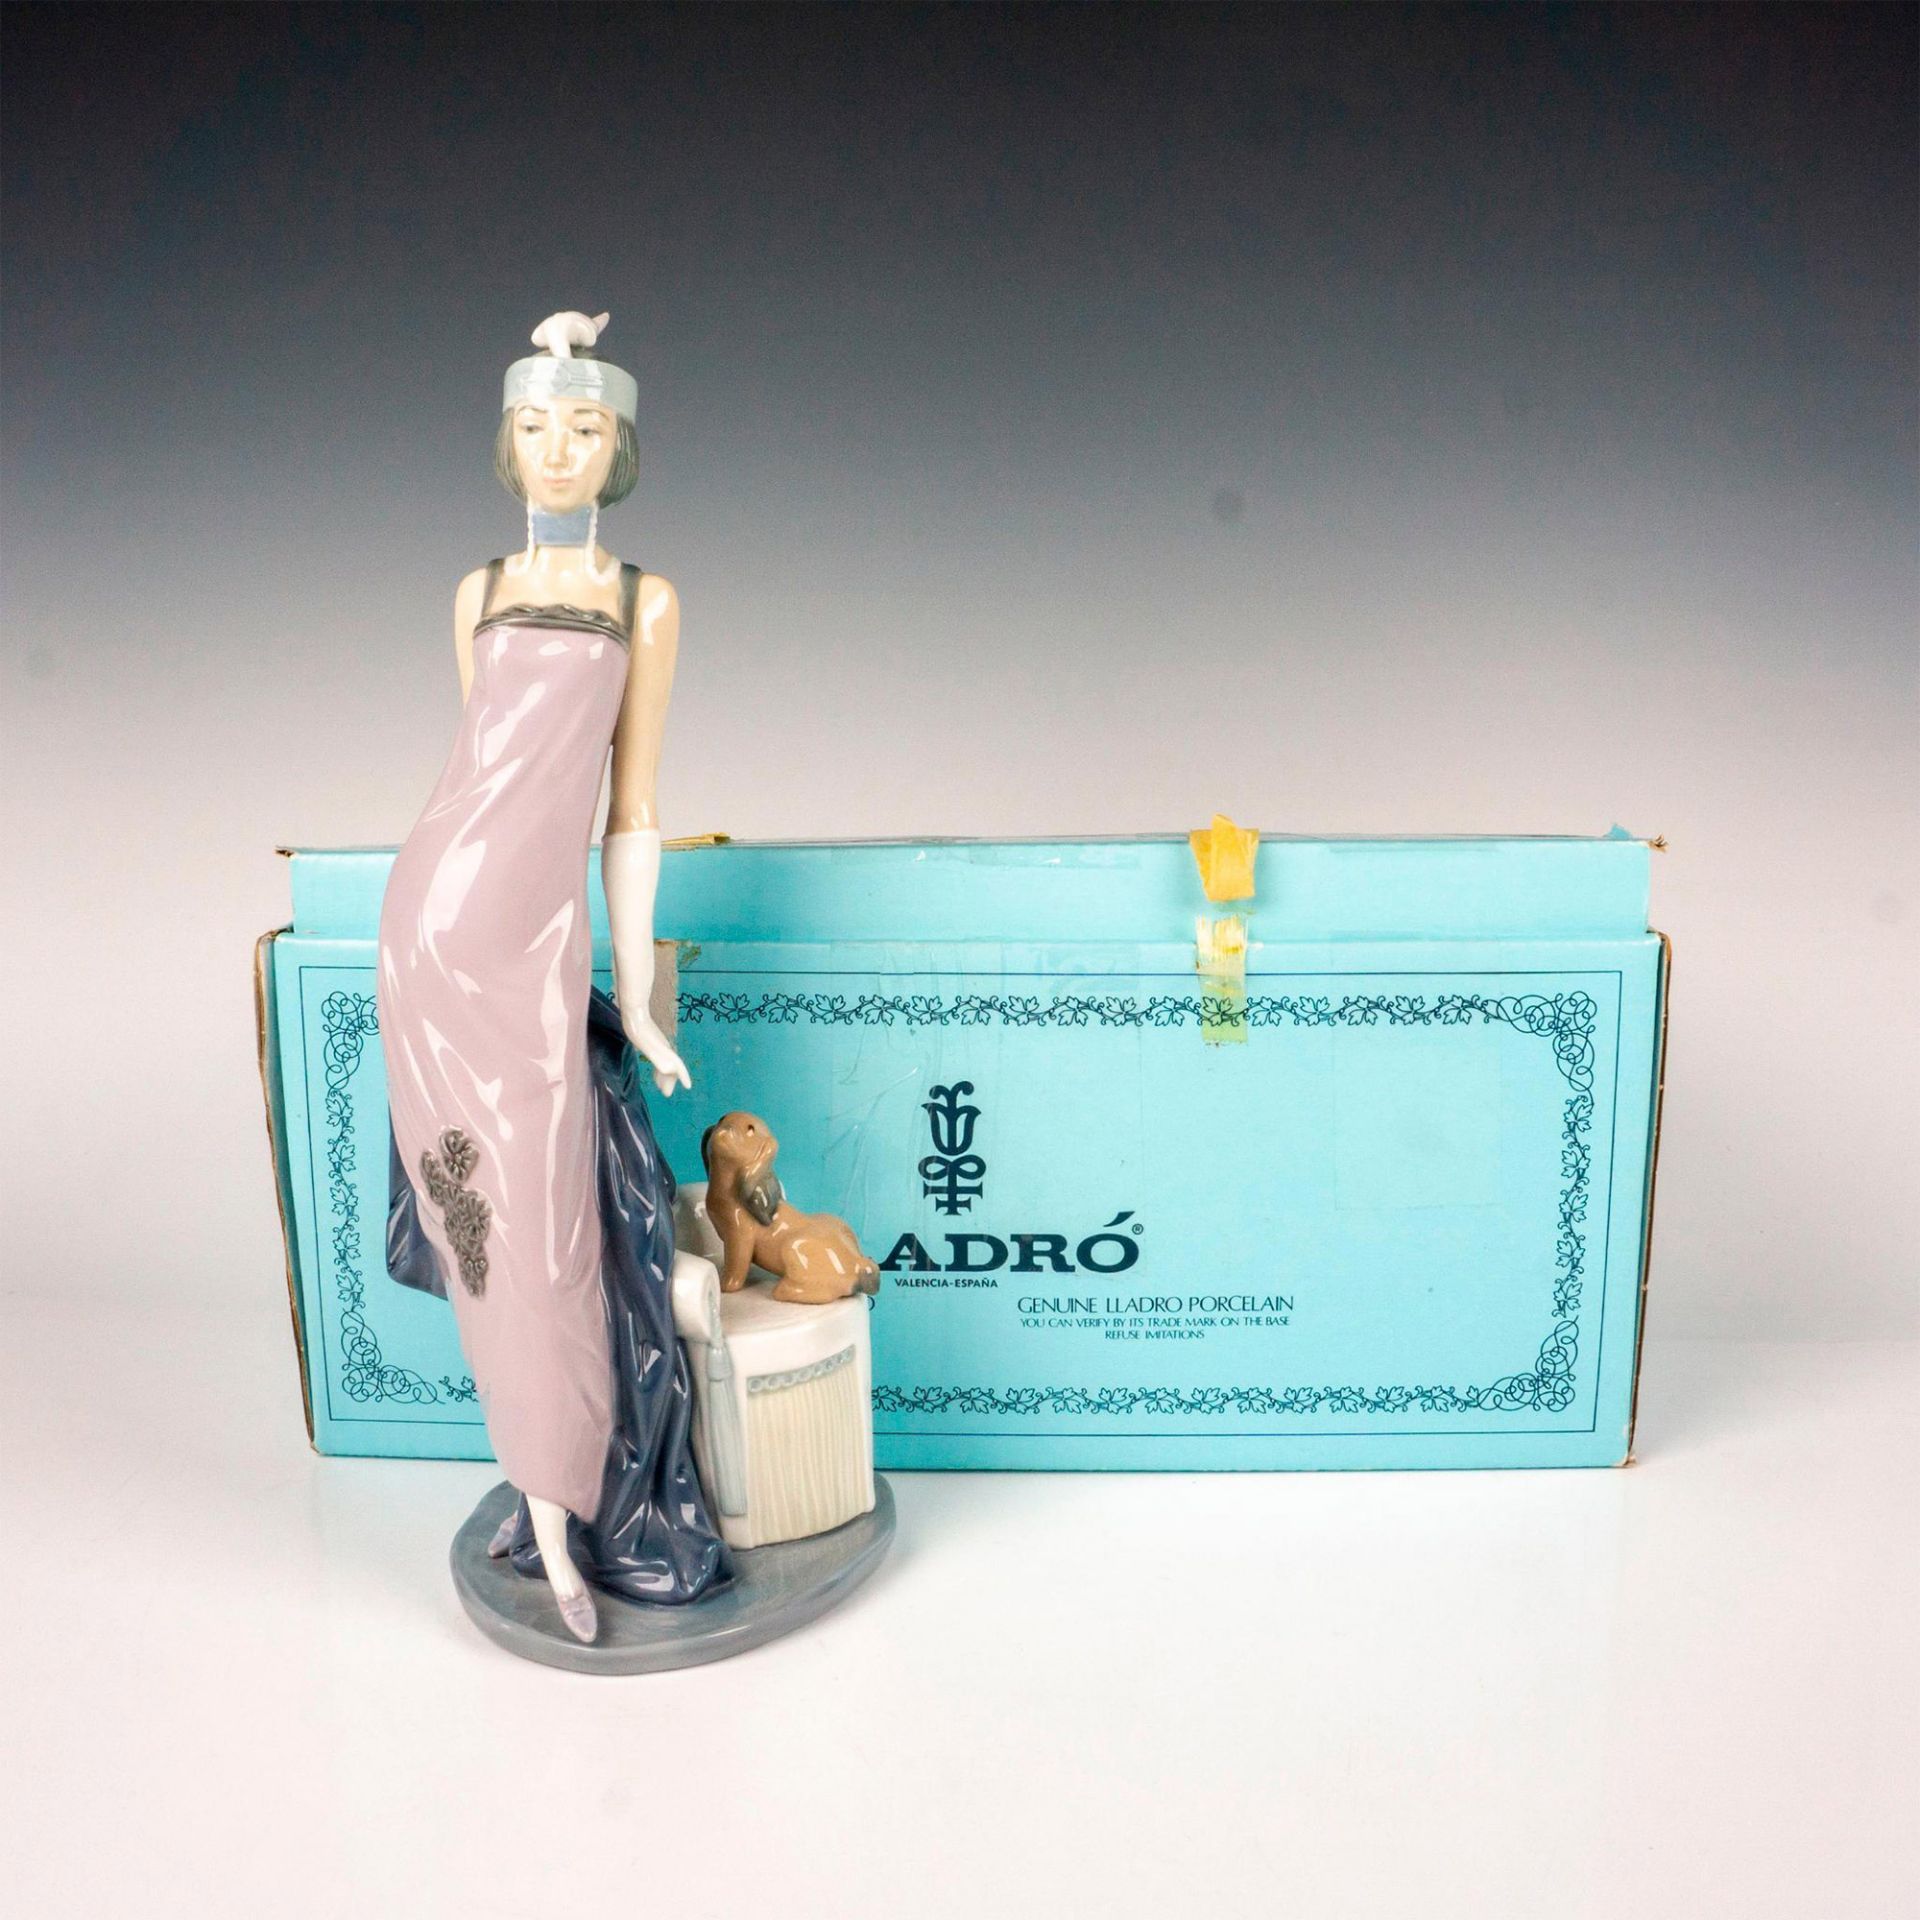 Couplet Lady 1005174 - Lladro Porcelain Figurine - Image 4 of 4